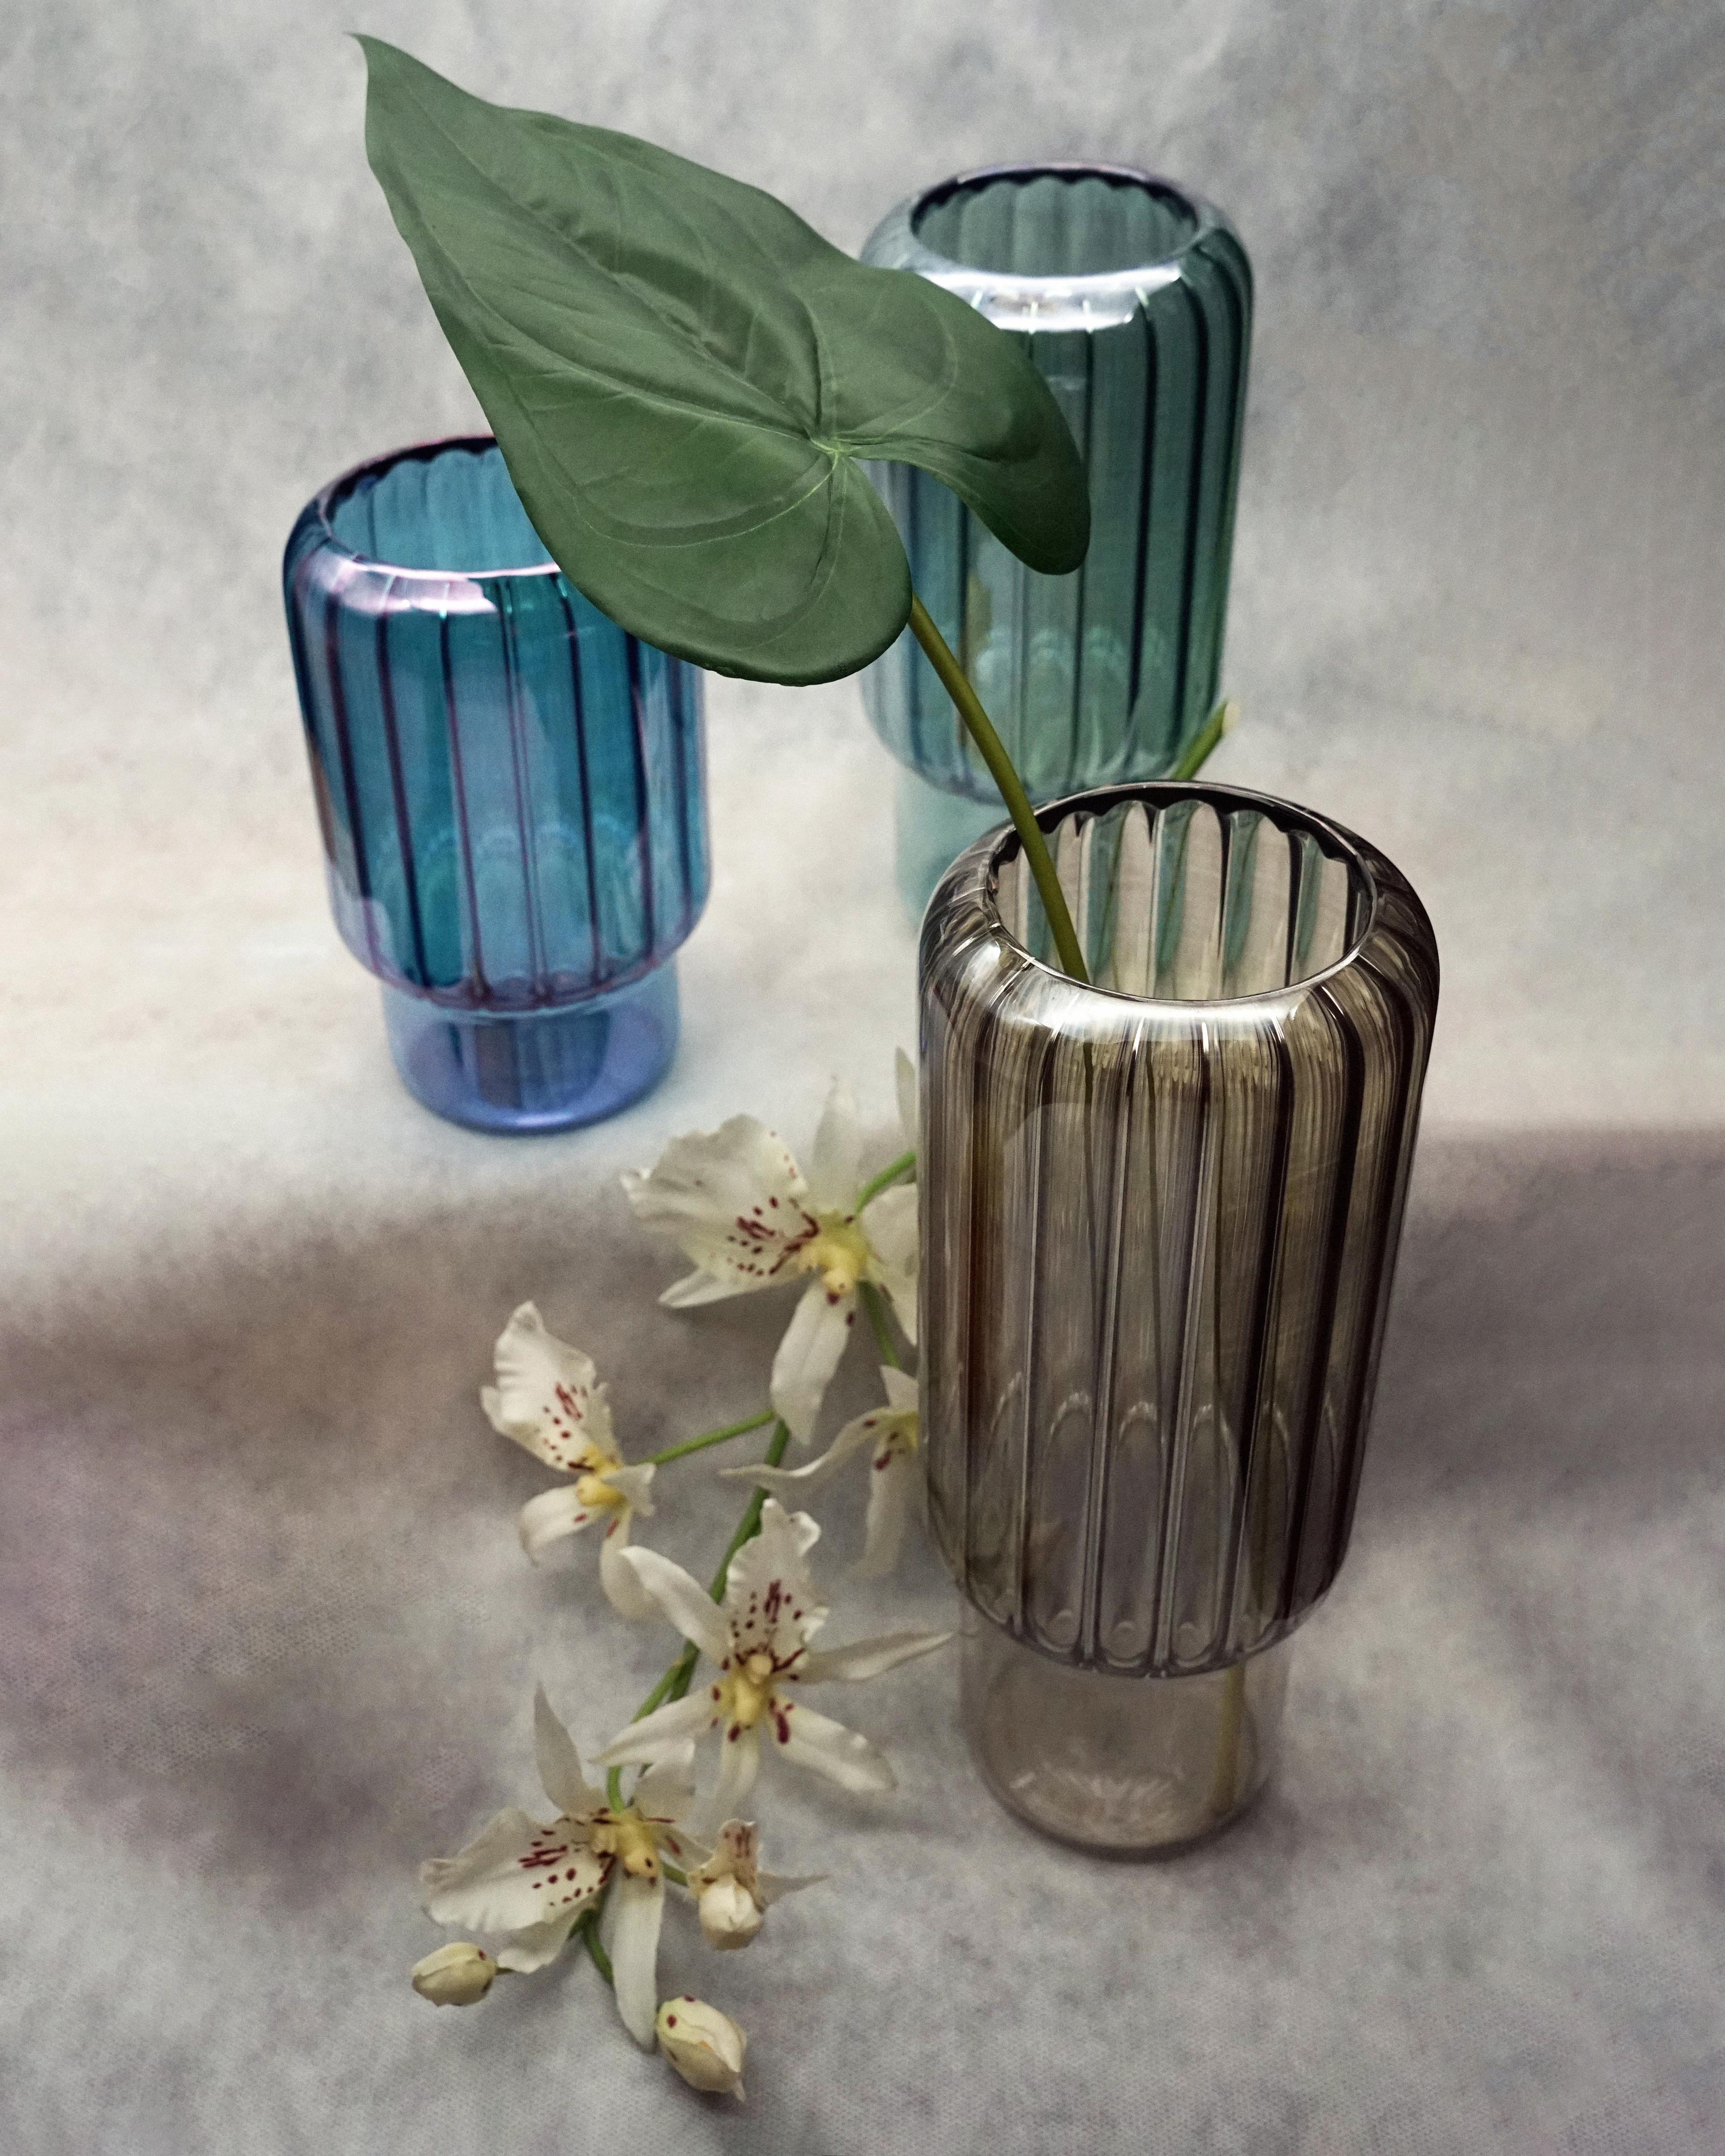 Hand-Crafted 21st Century Handcrafted Glass Vase BRUMMA Medium, Green Color, Medium, Kanz  For Sale